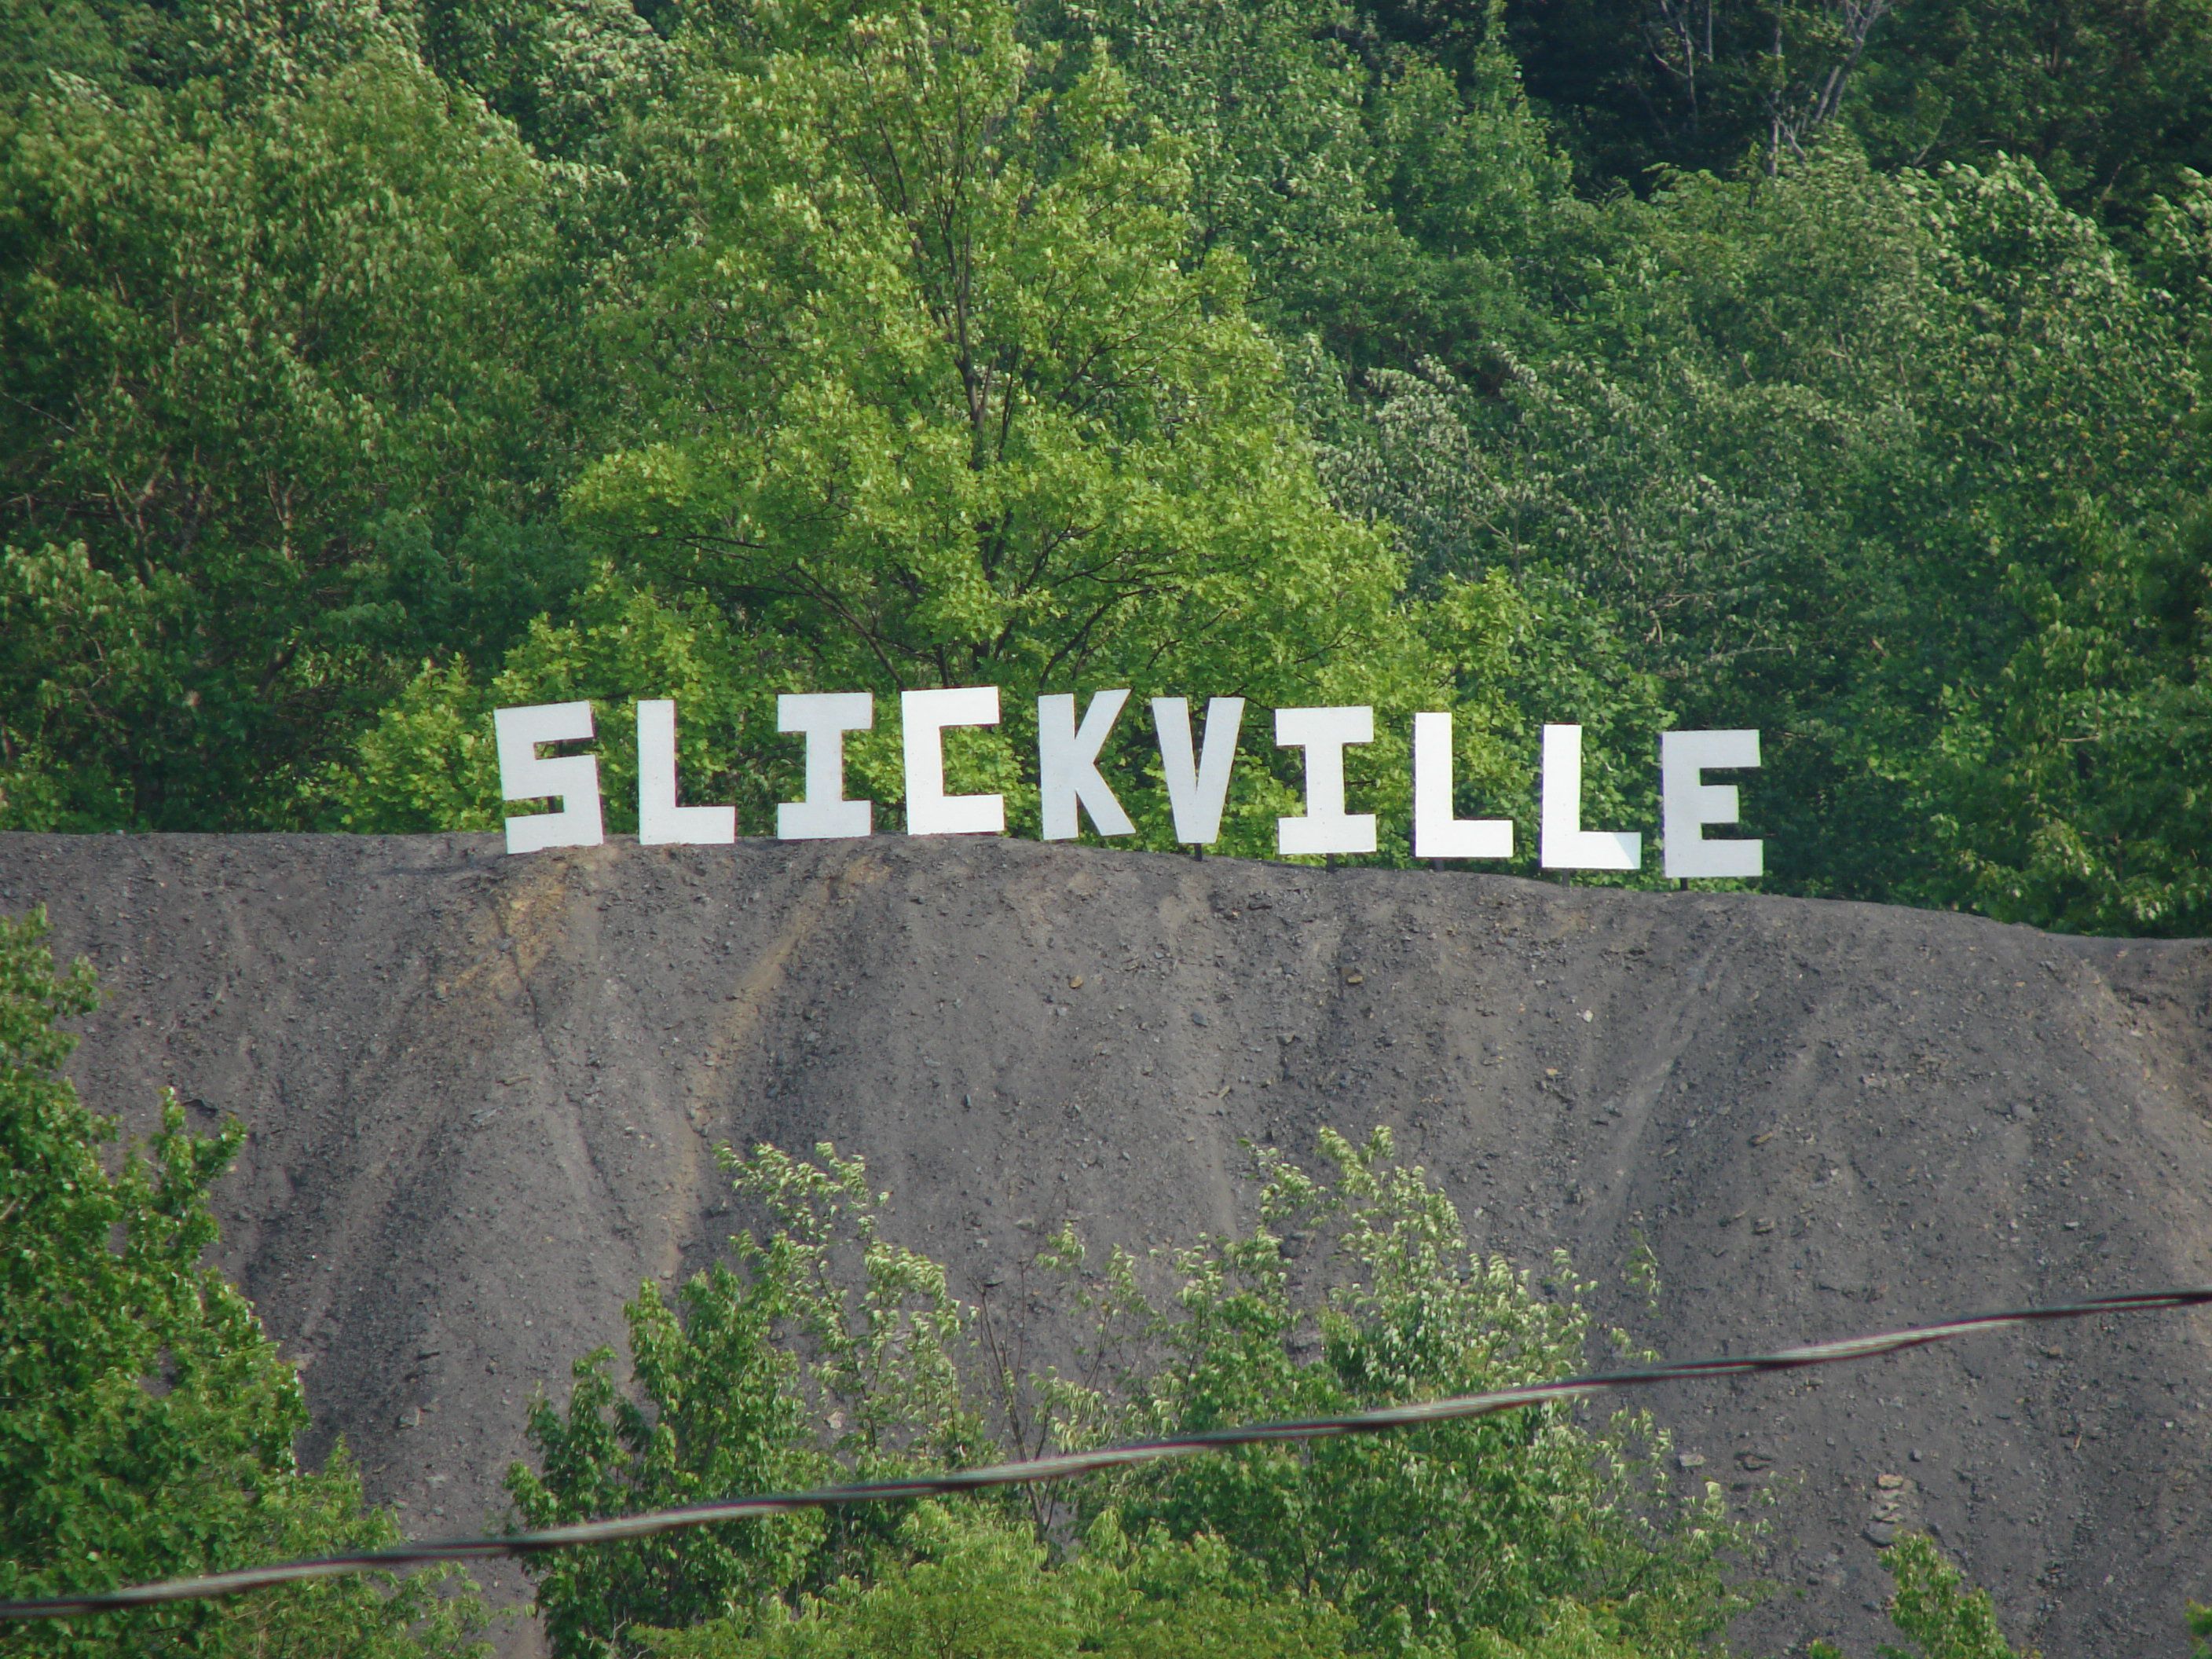 Slickville Sign
                      Photo